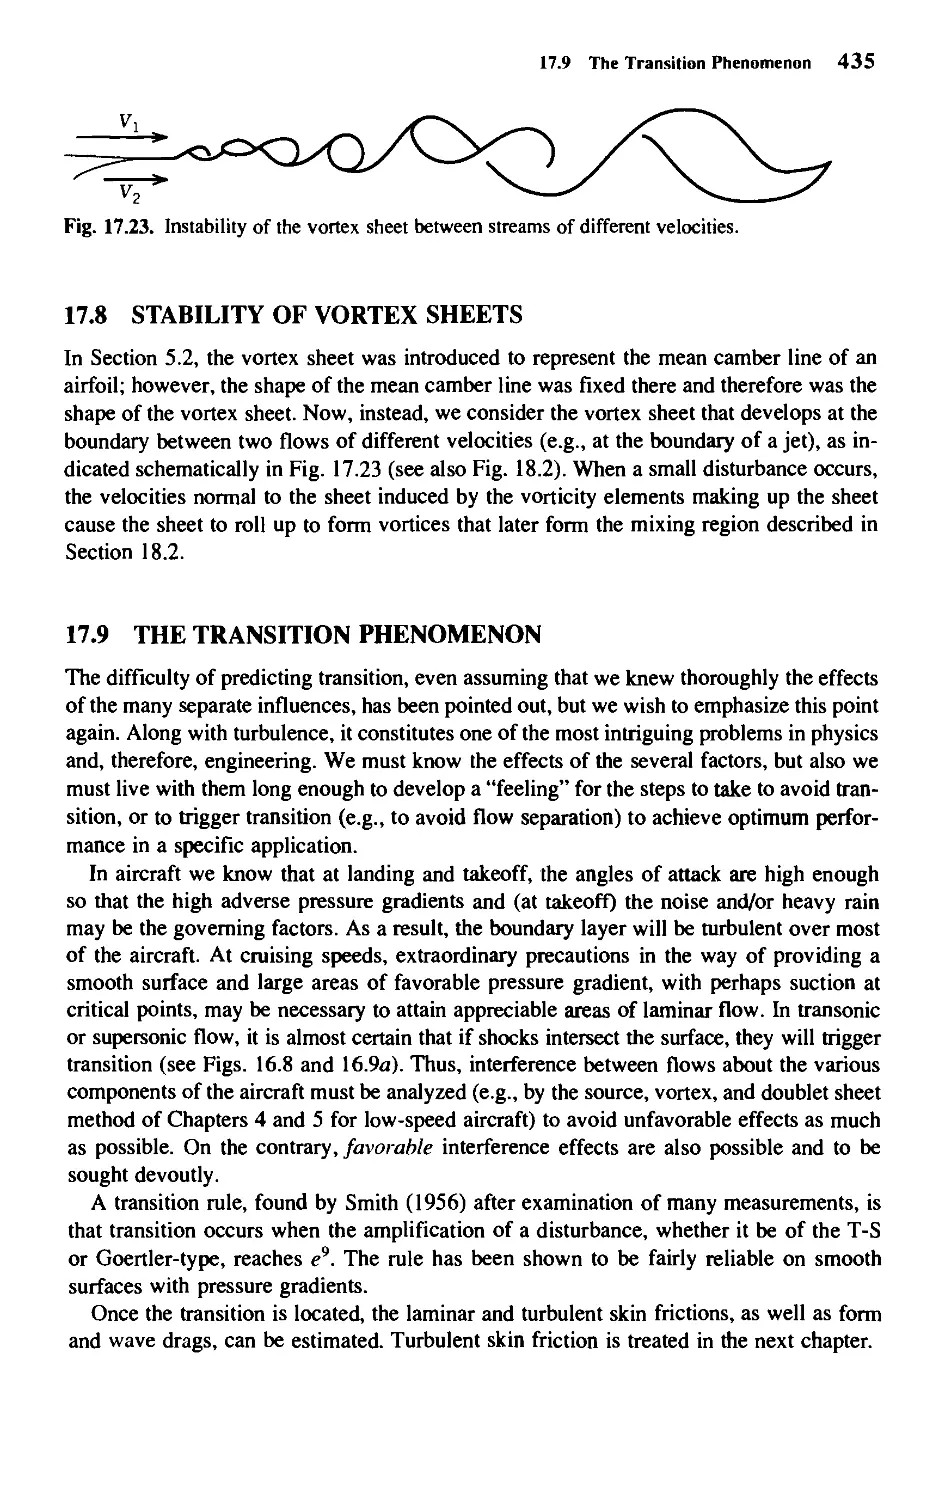 17.8 - Stability of Vortex Sheets
17.9 - The Transition Phenomenon